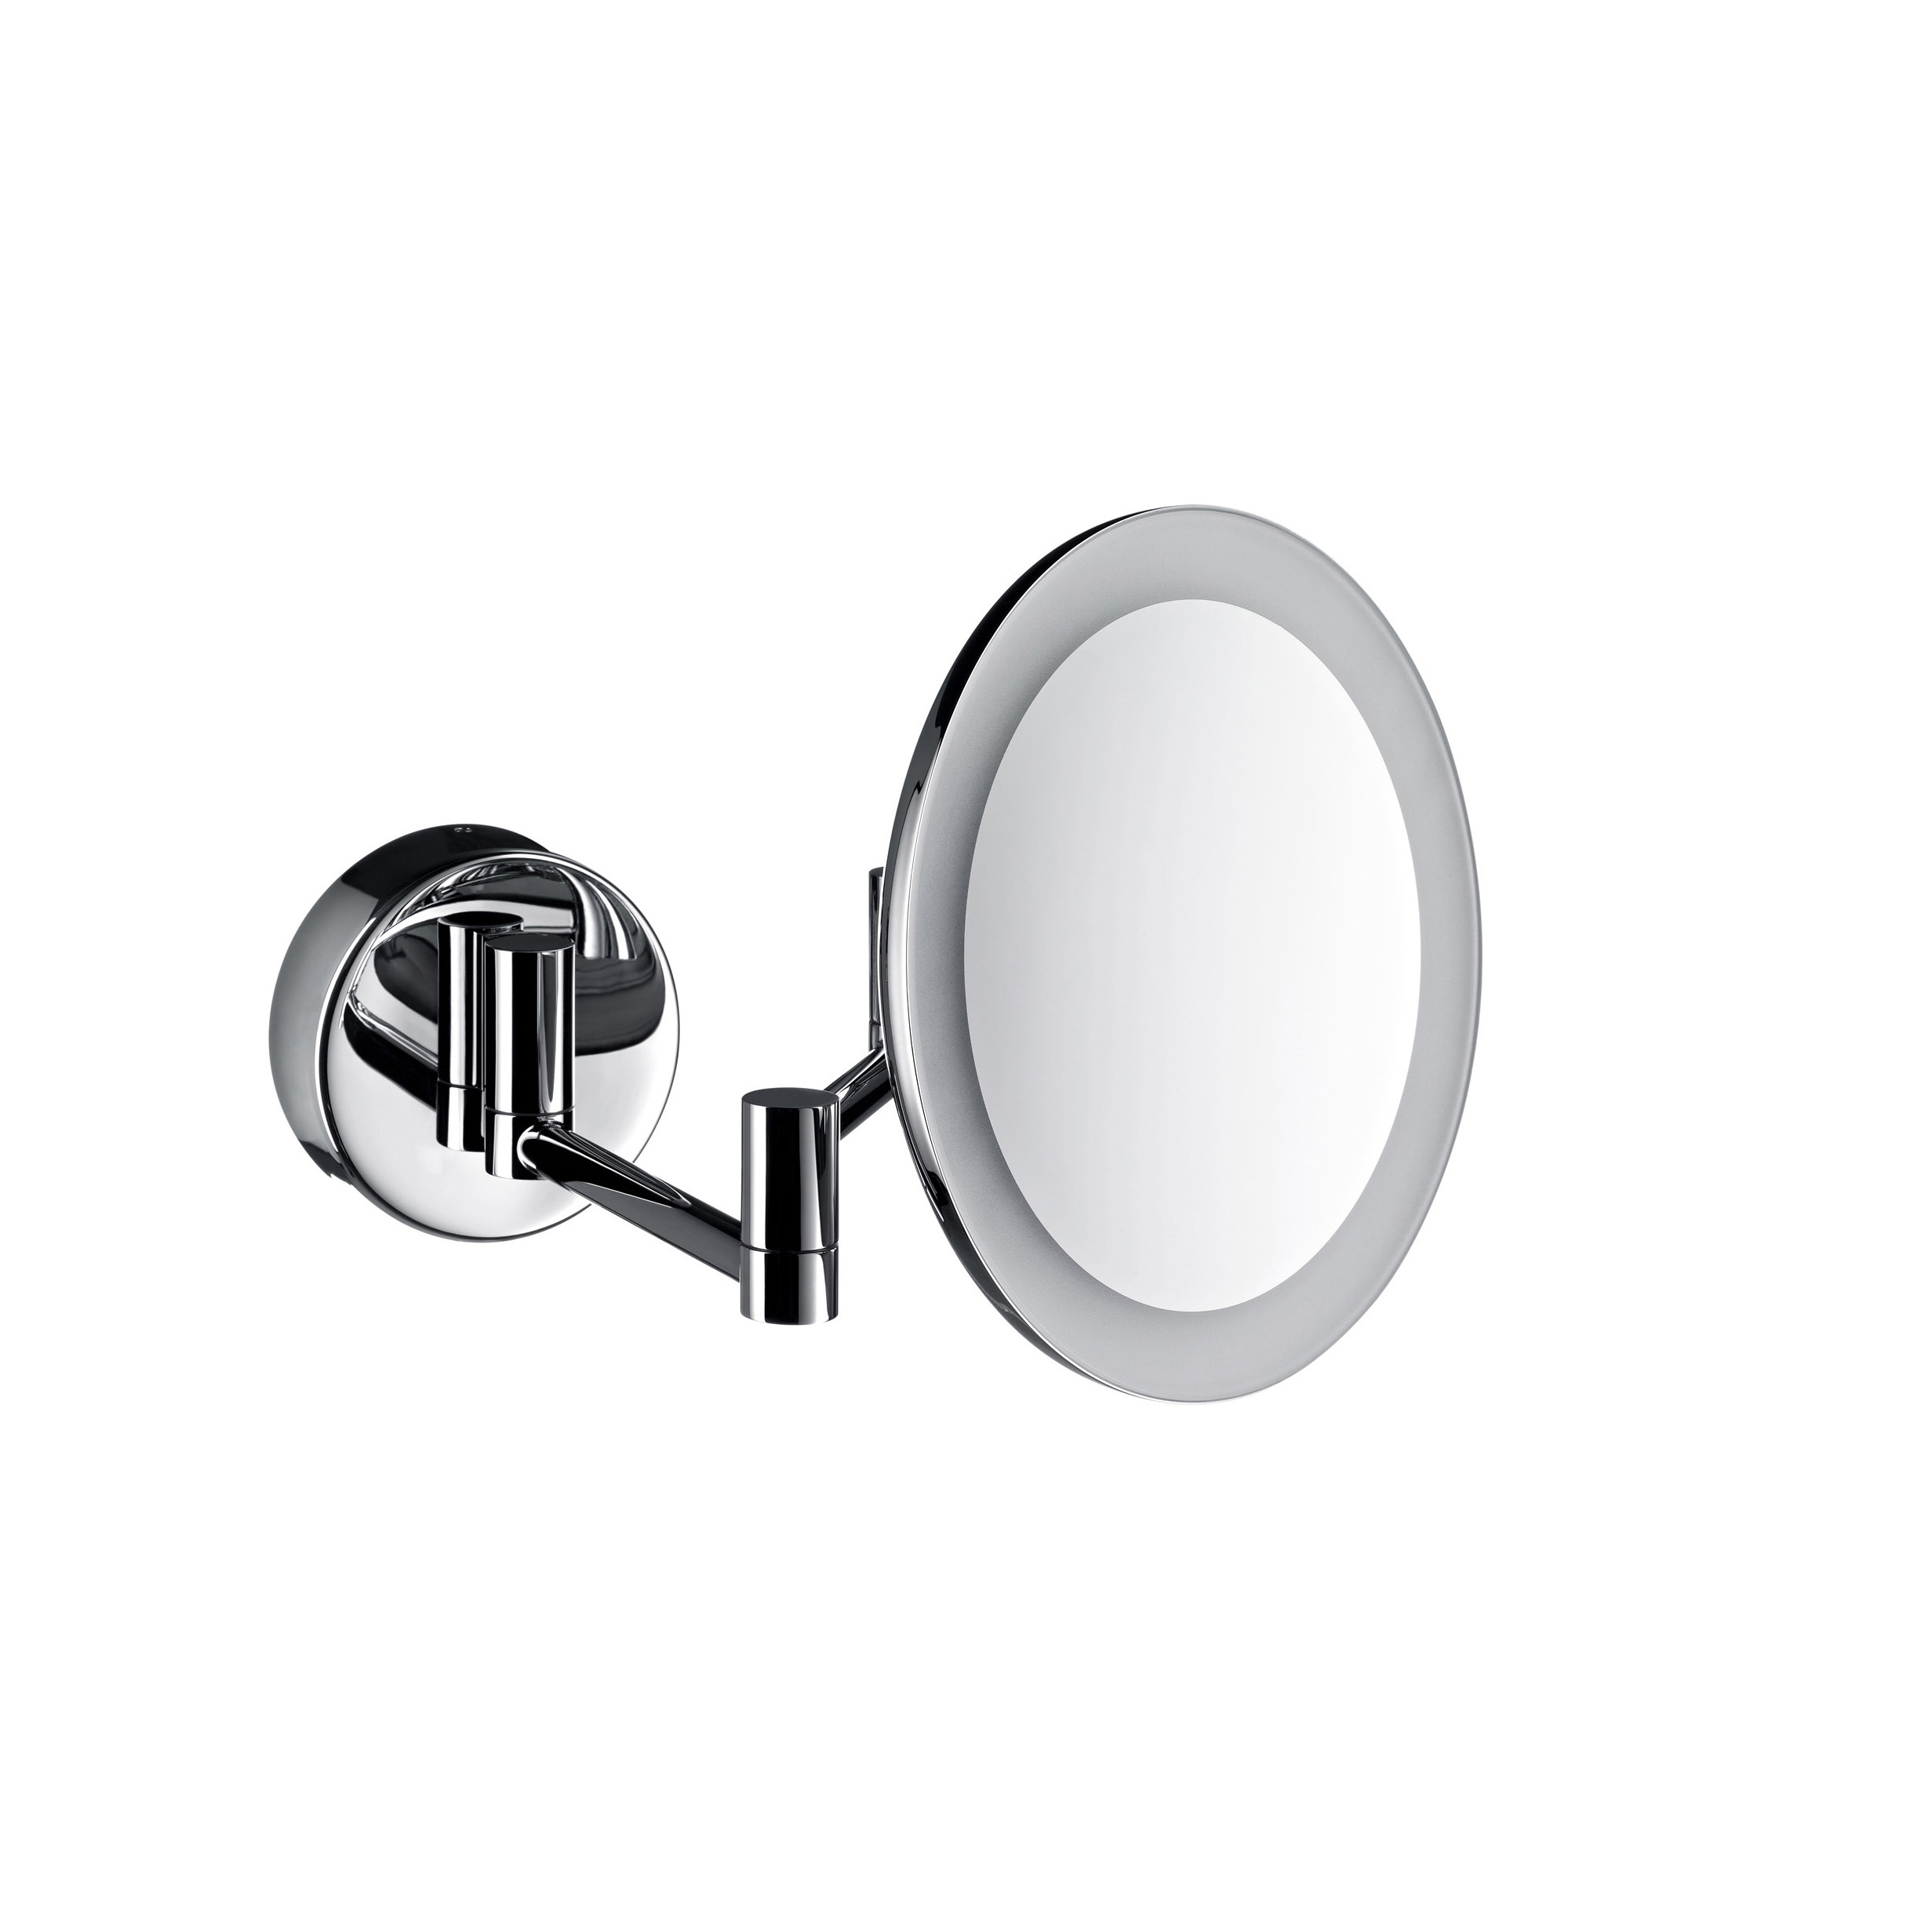 Spiegel 1095.001.20 lighted magnifying mirror